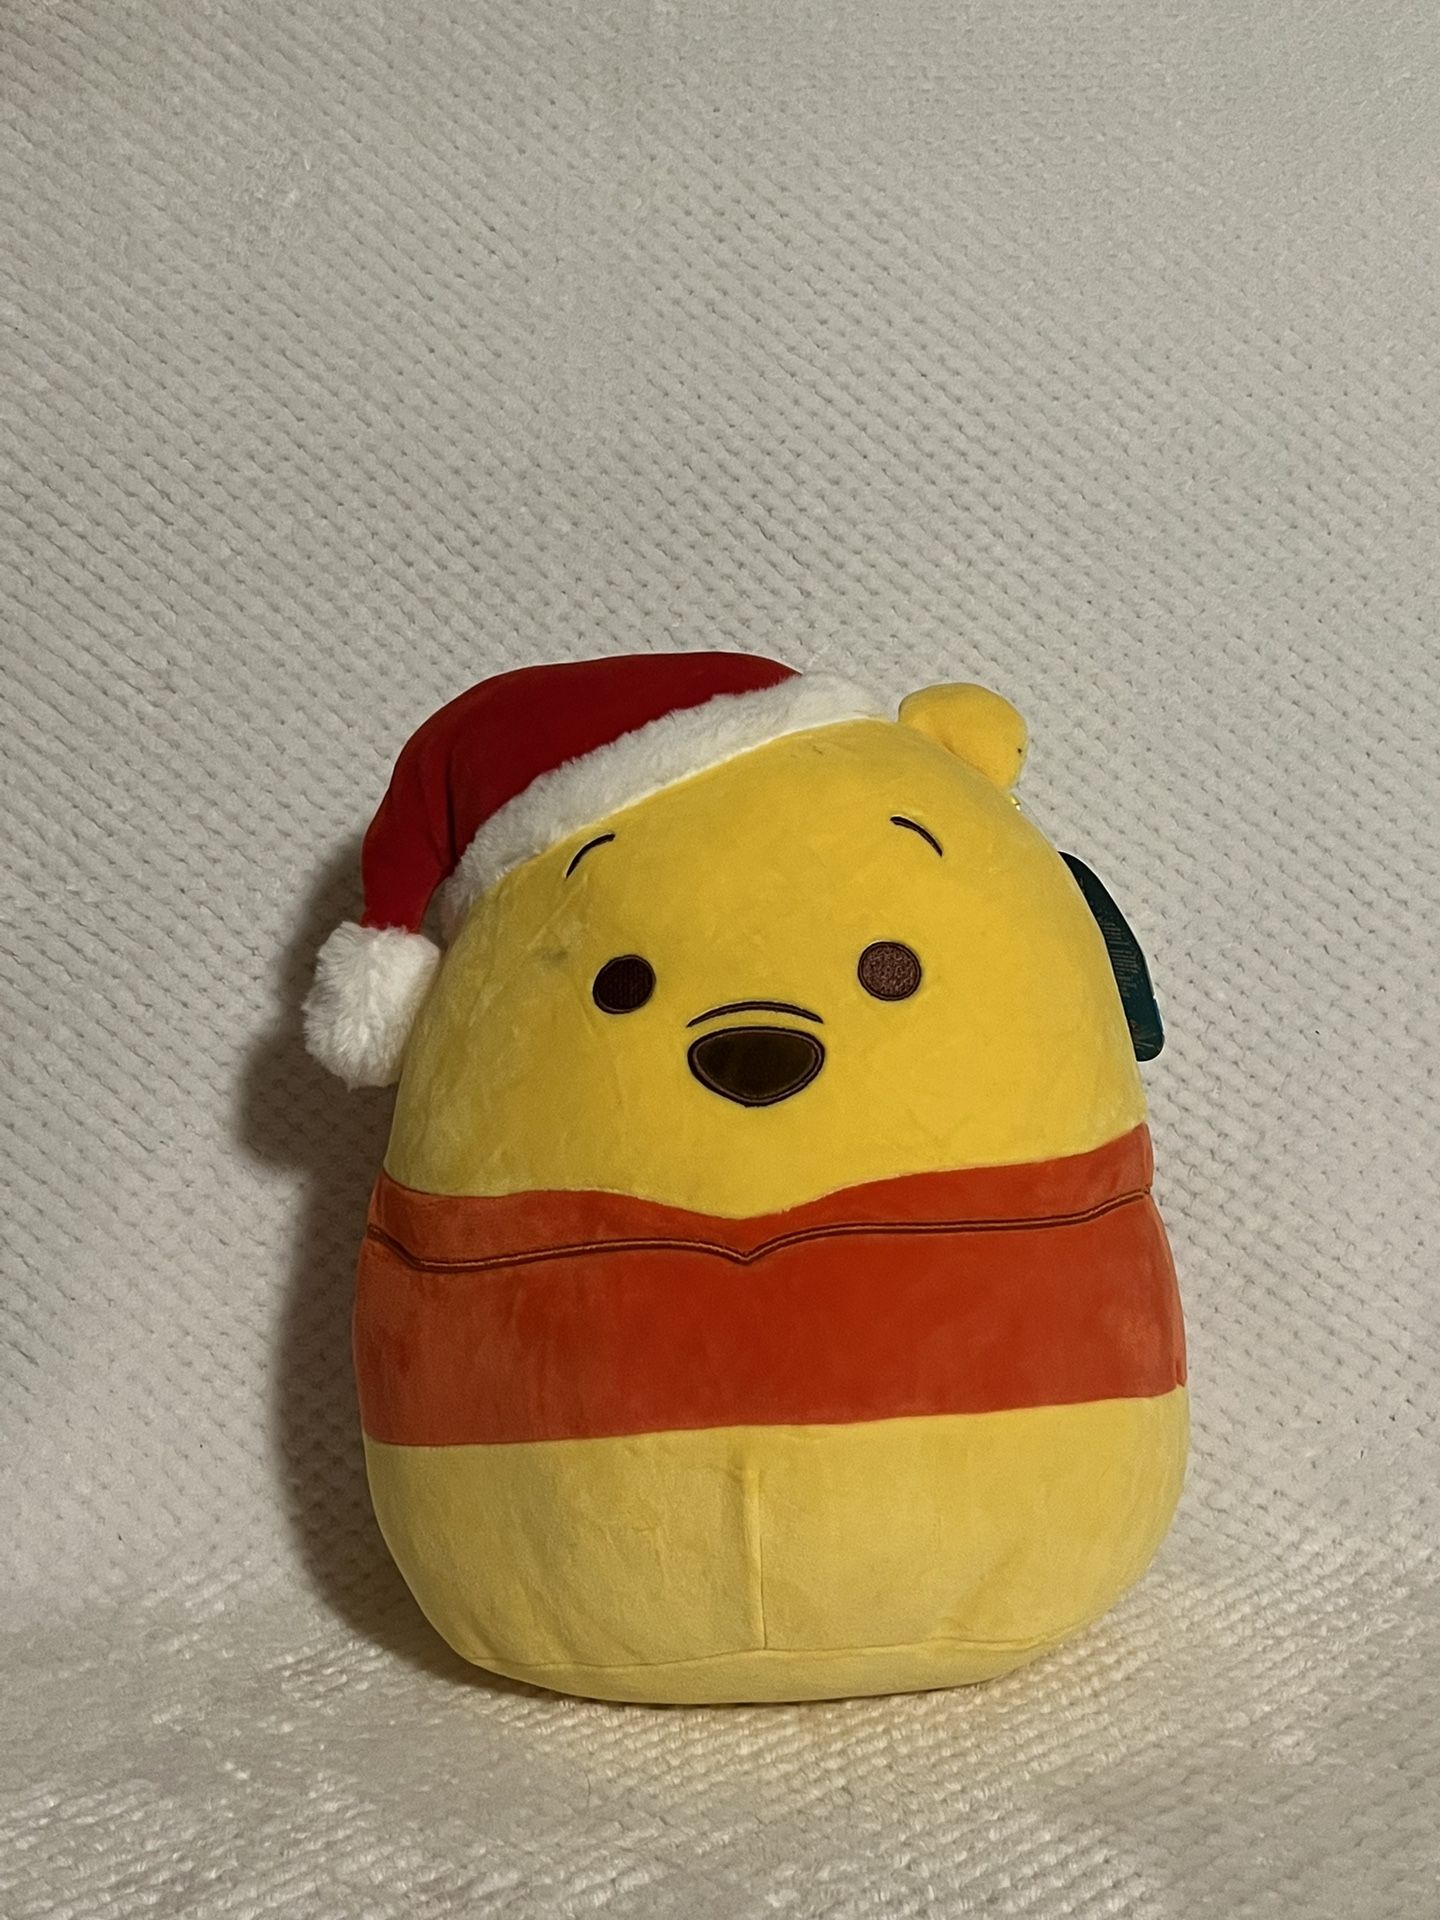 Winnie-the-Pooh Squishmallow 